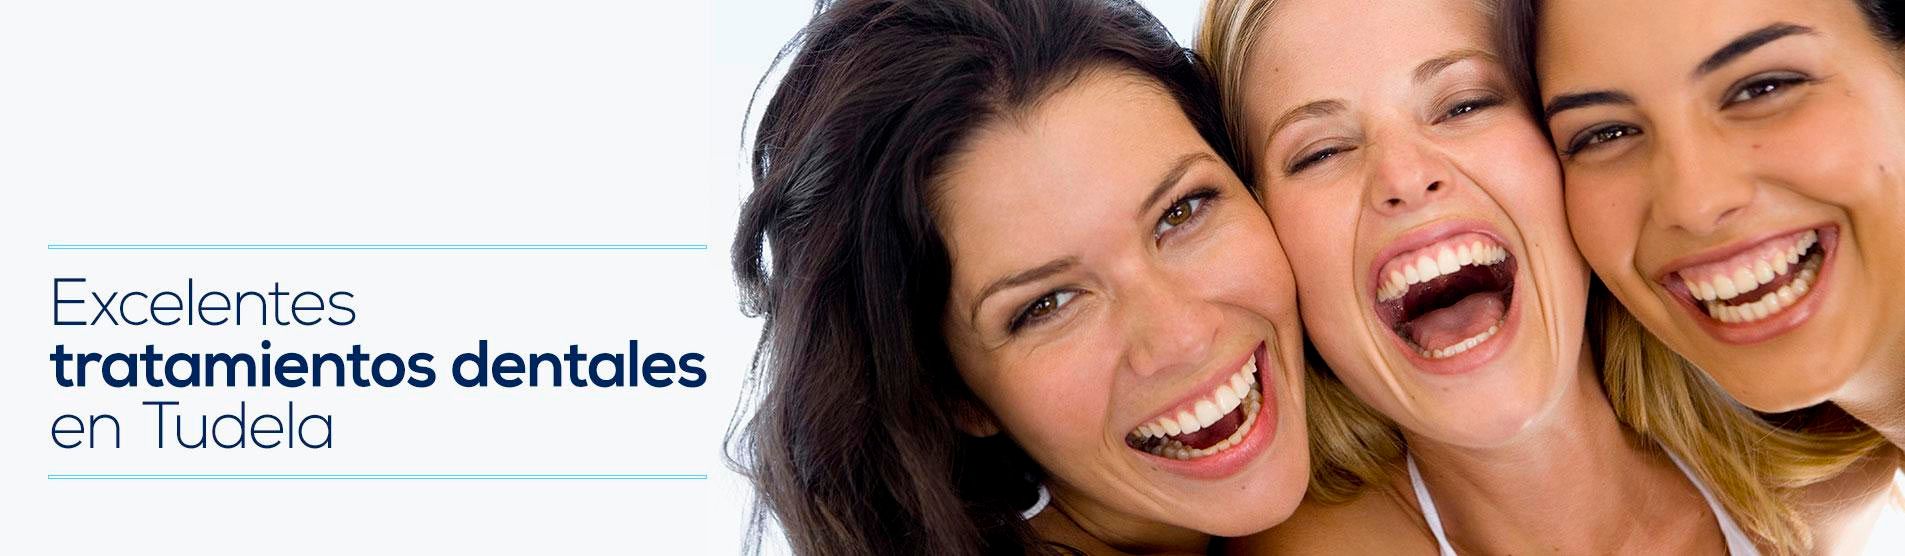 Clínica Dental Rubio personas sonriendo